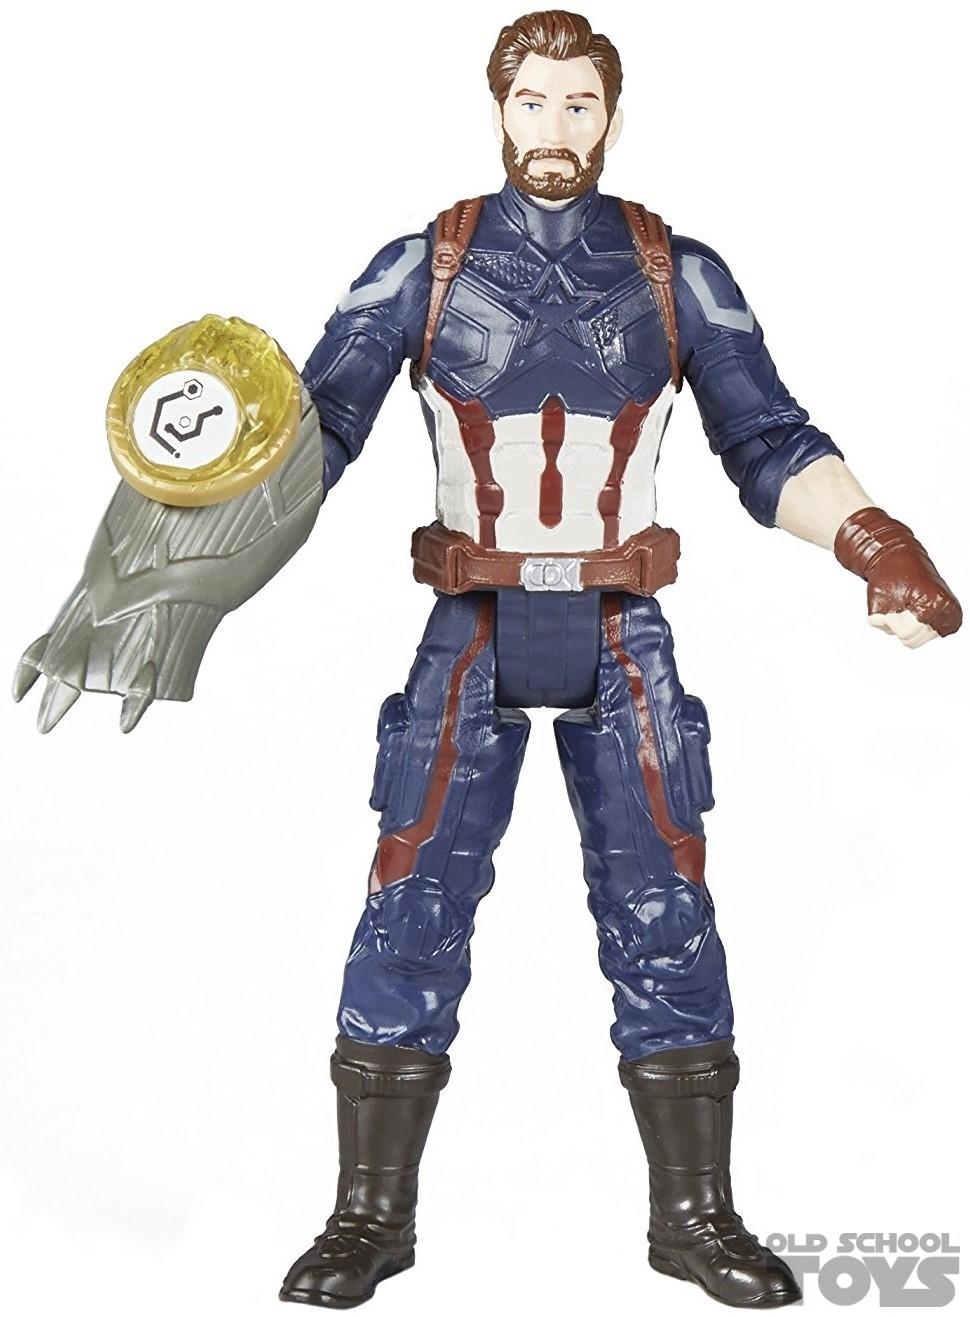 Infinity captain war america Steve Rogers